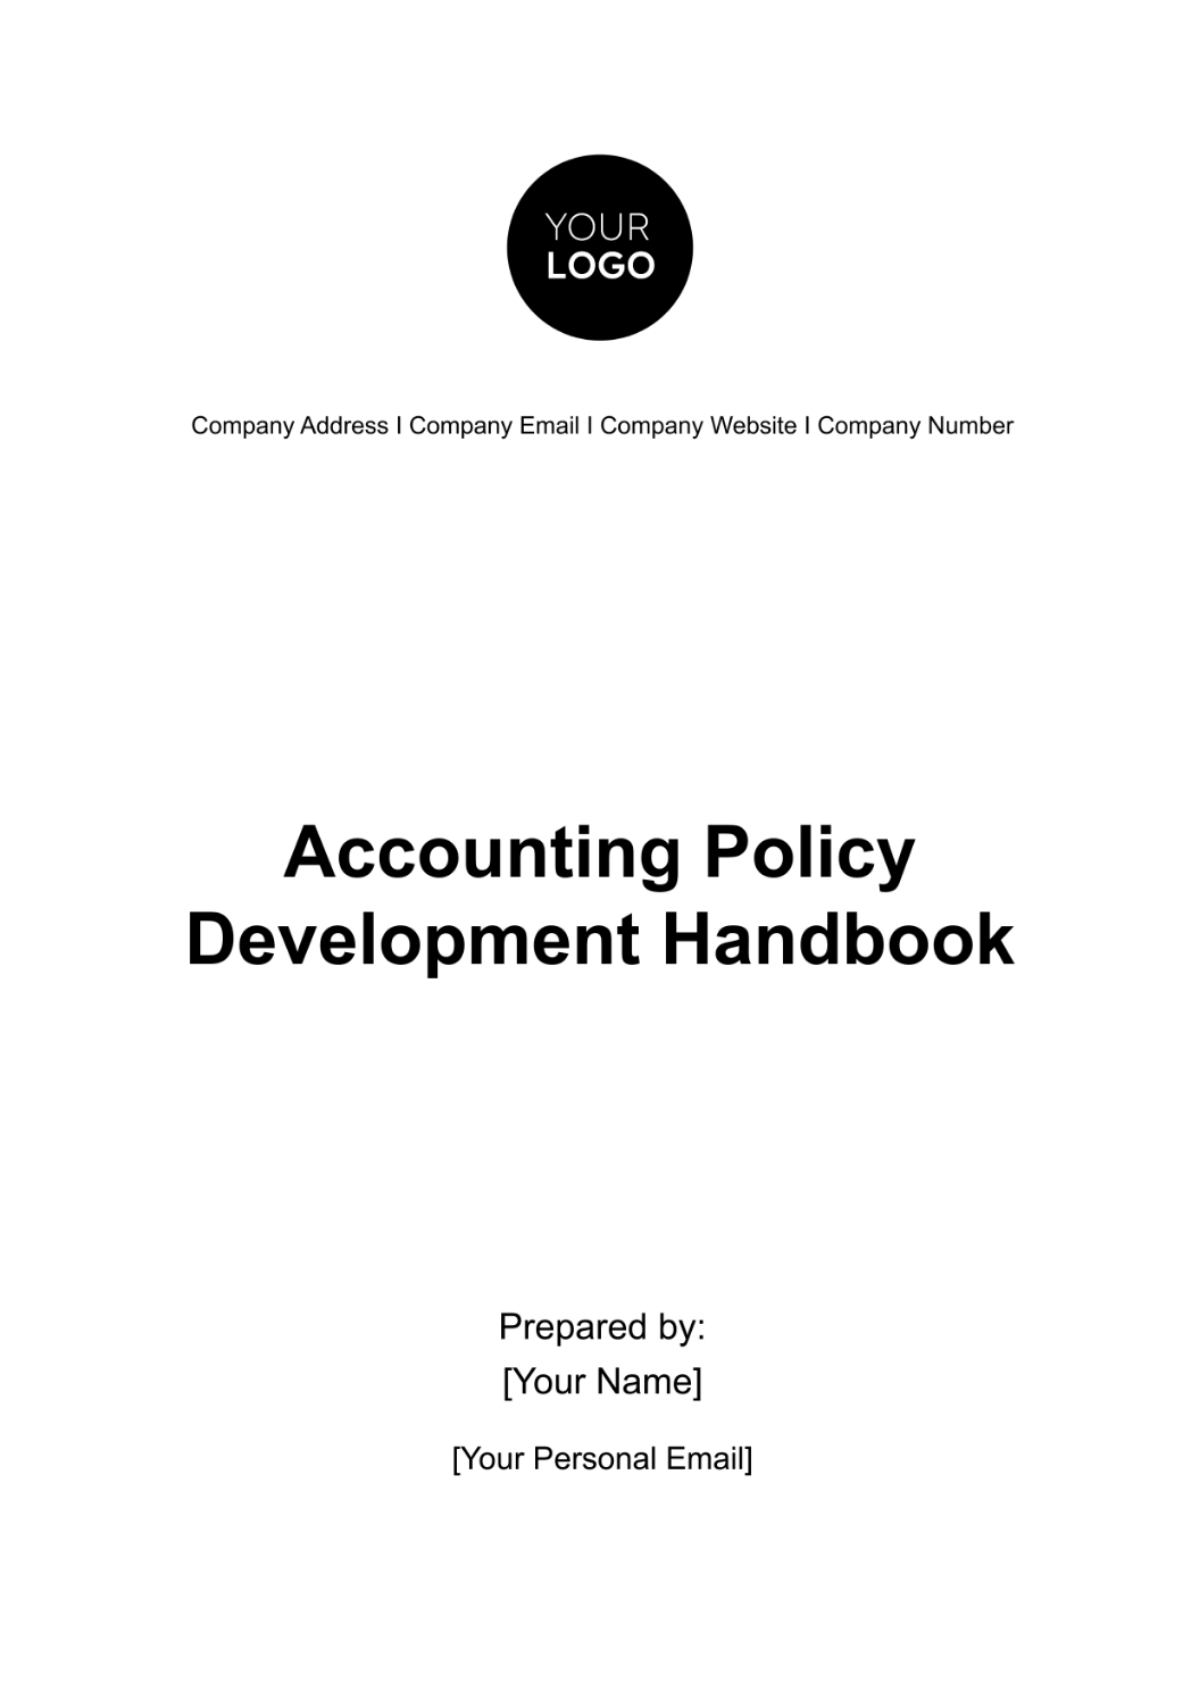 Accounting Policy Development Handbook Template